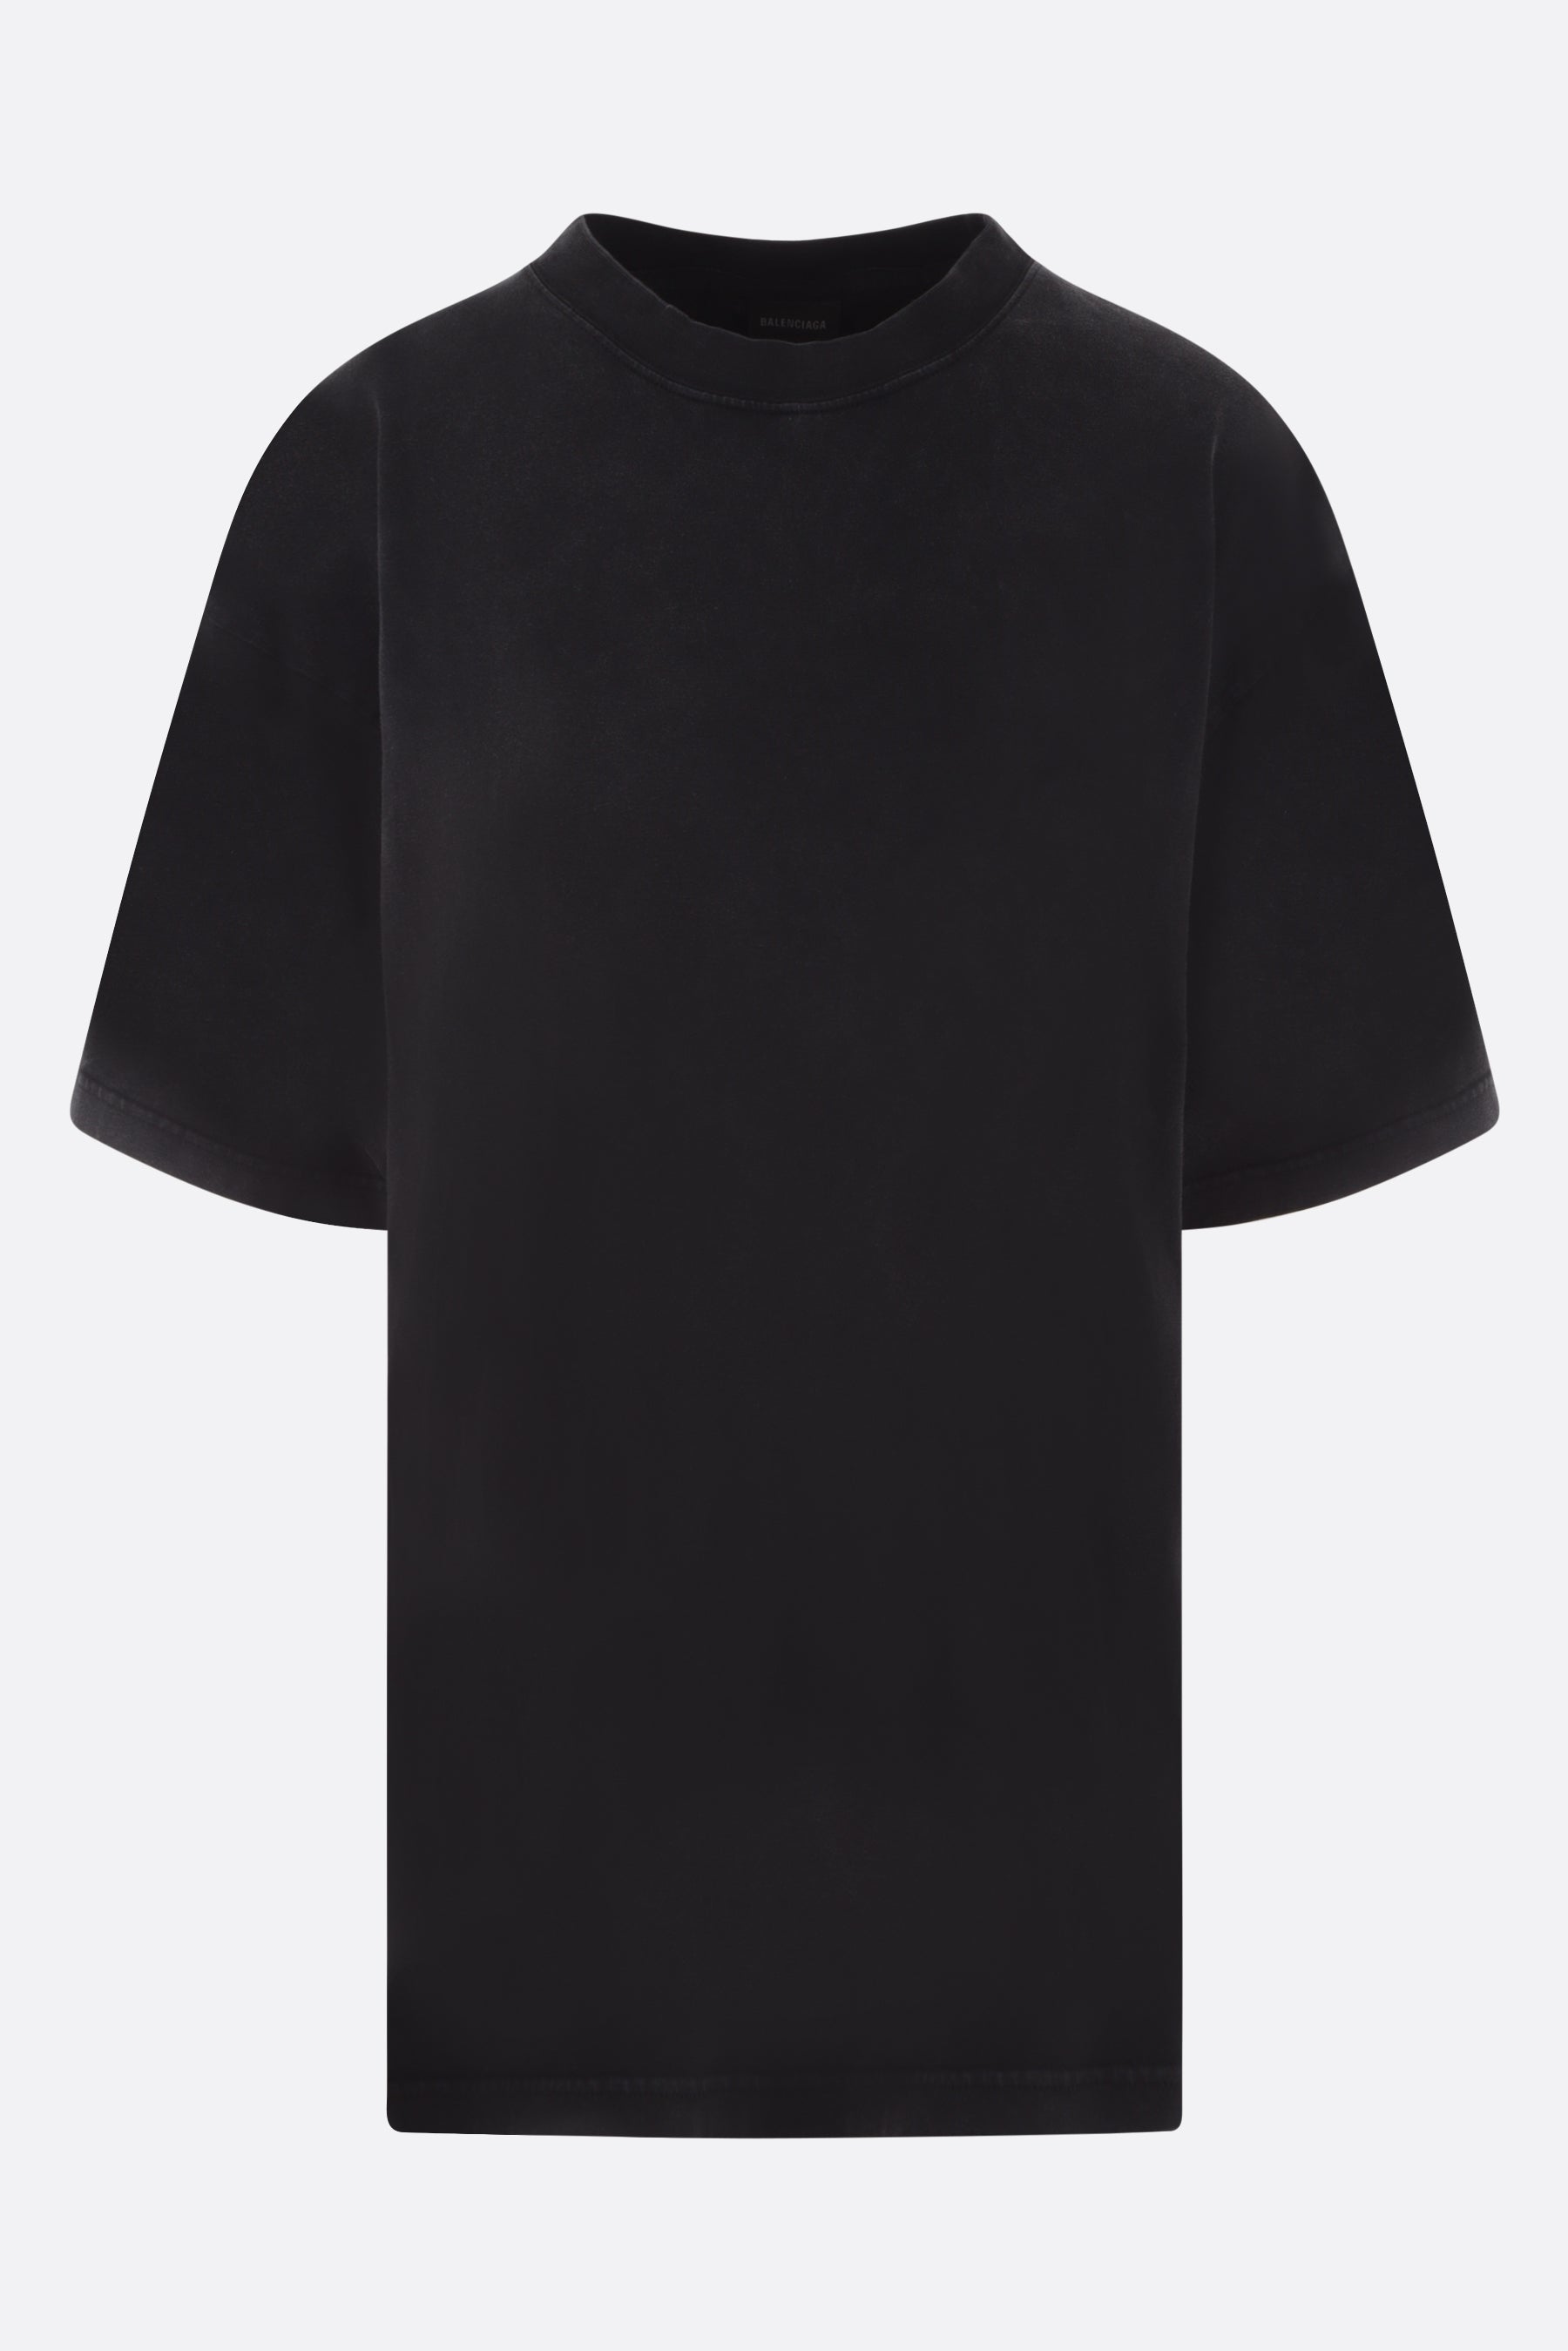 Balenciaga Black oversize T-shirt with logo